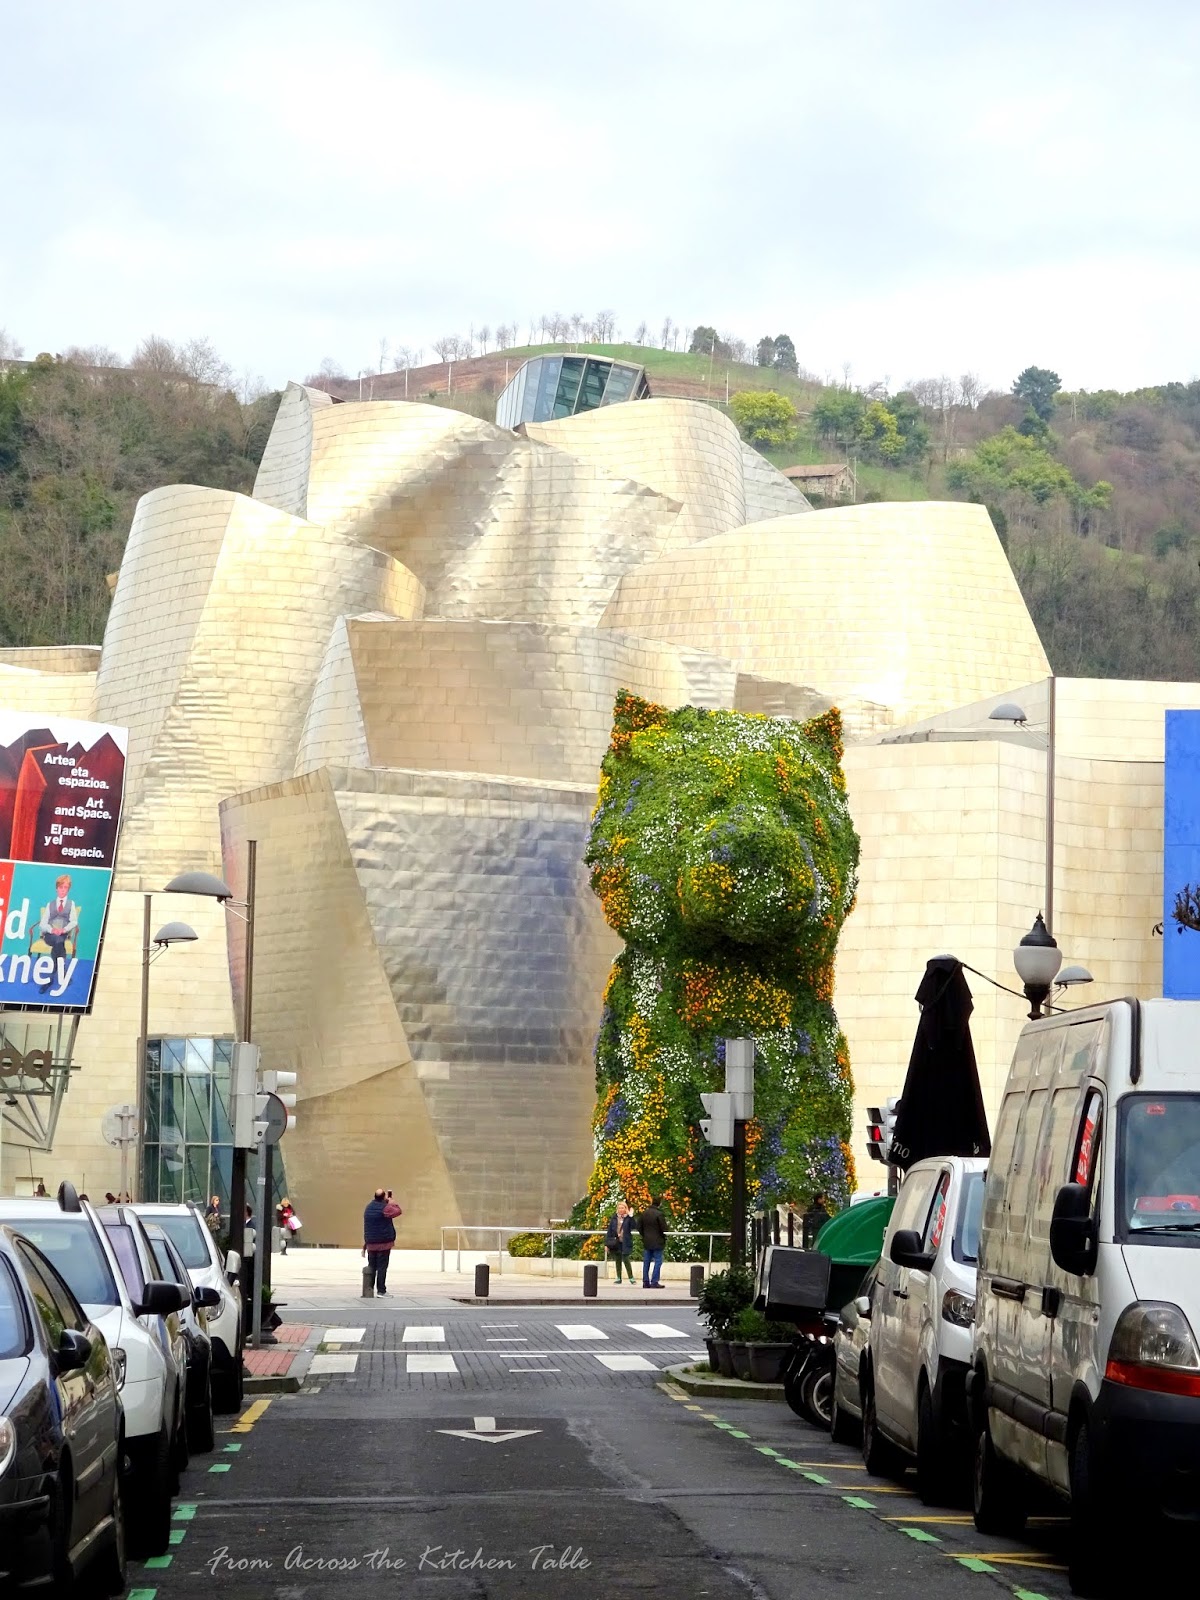 Books: Guggenheim Bilbao